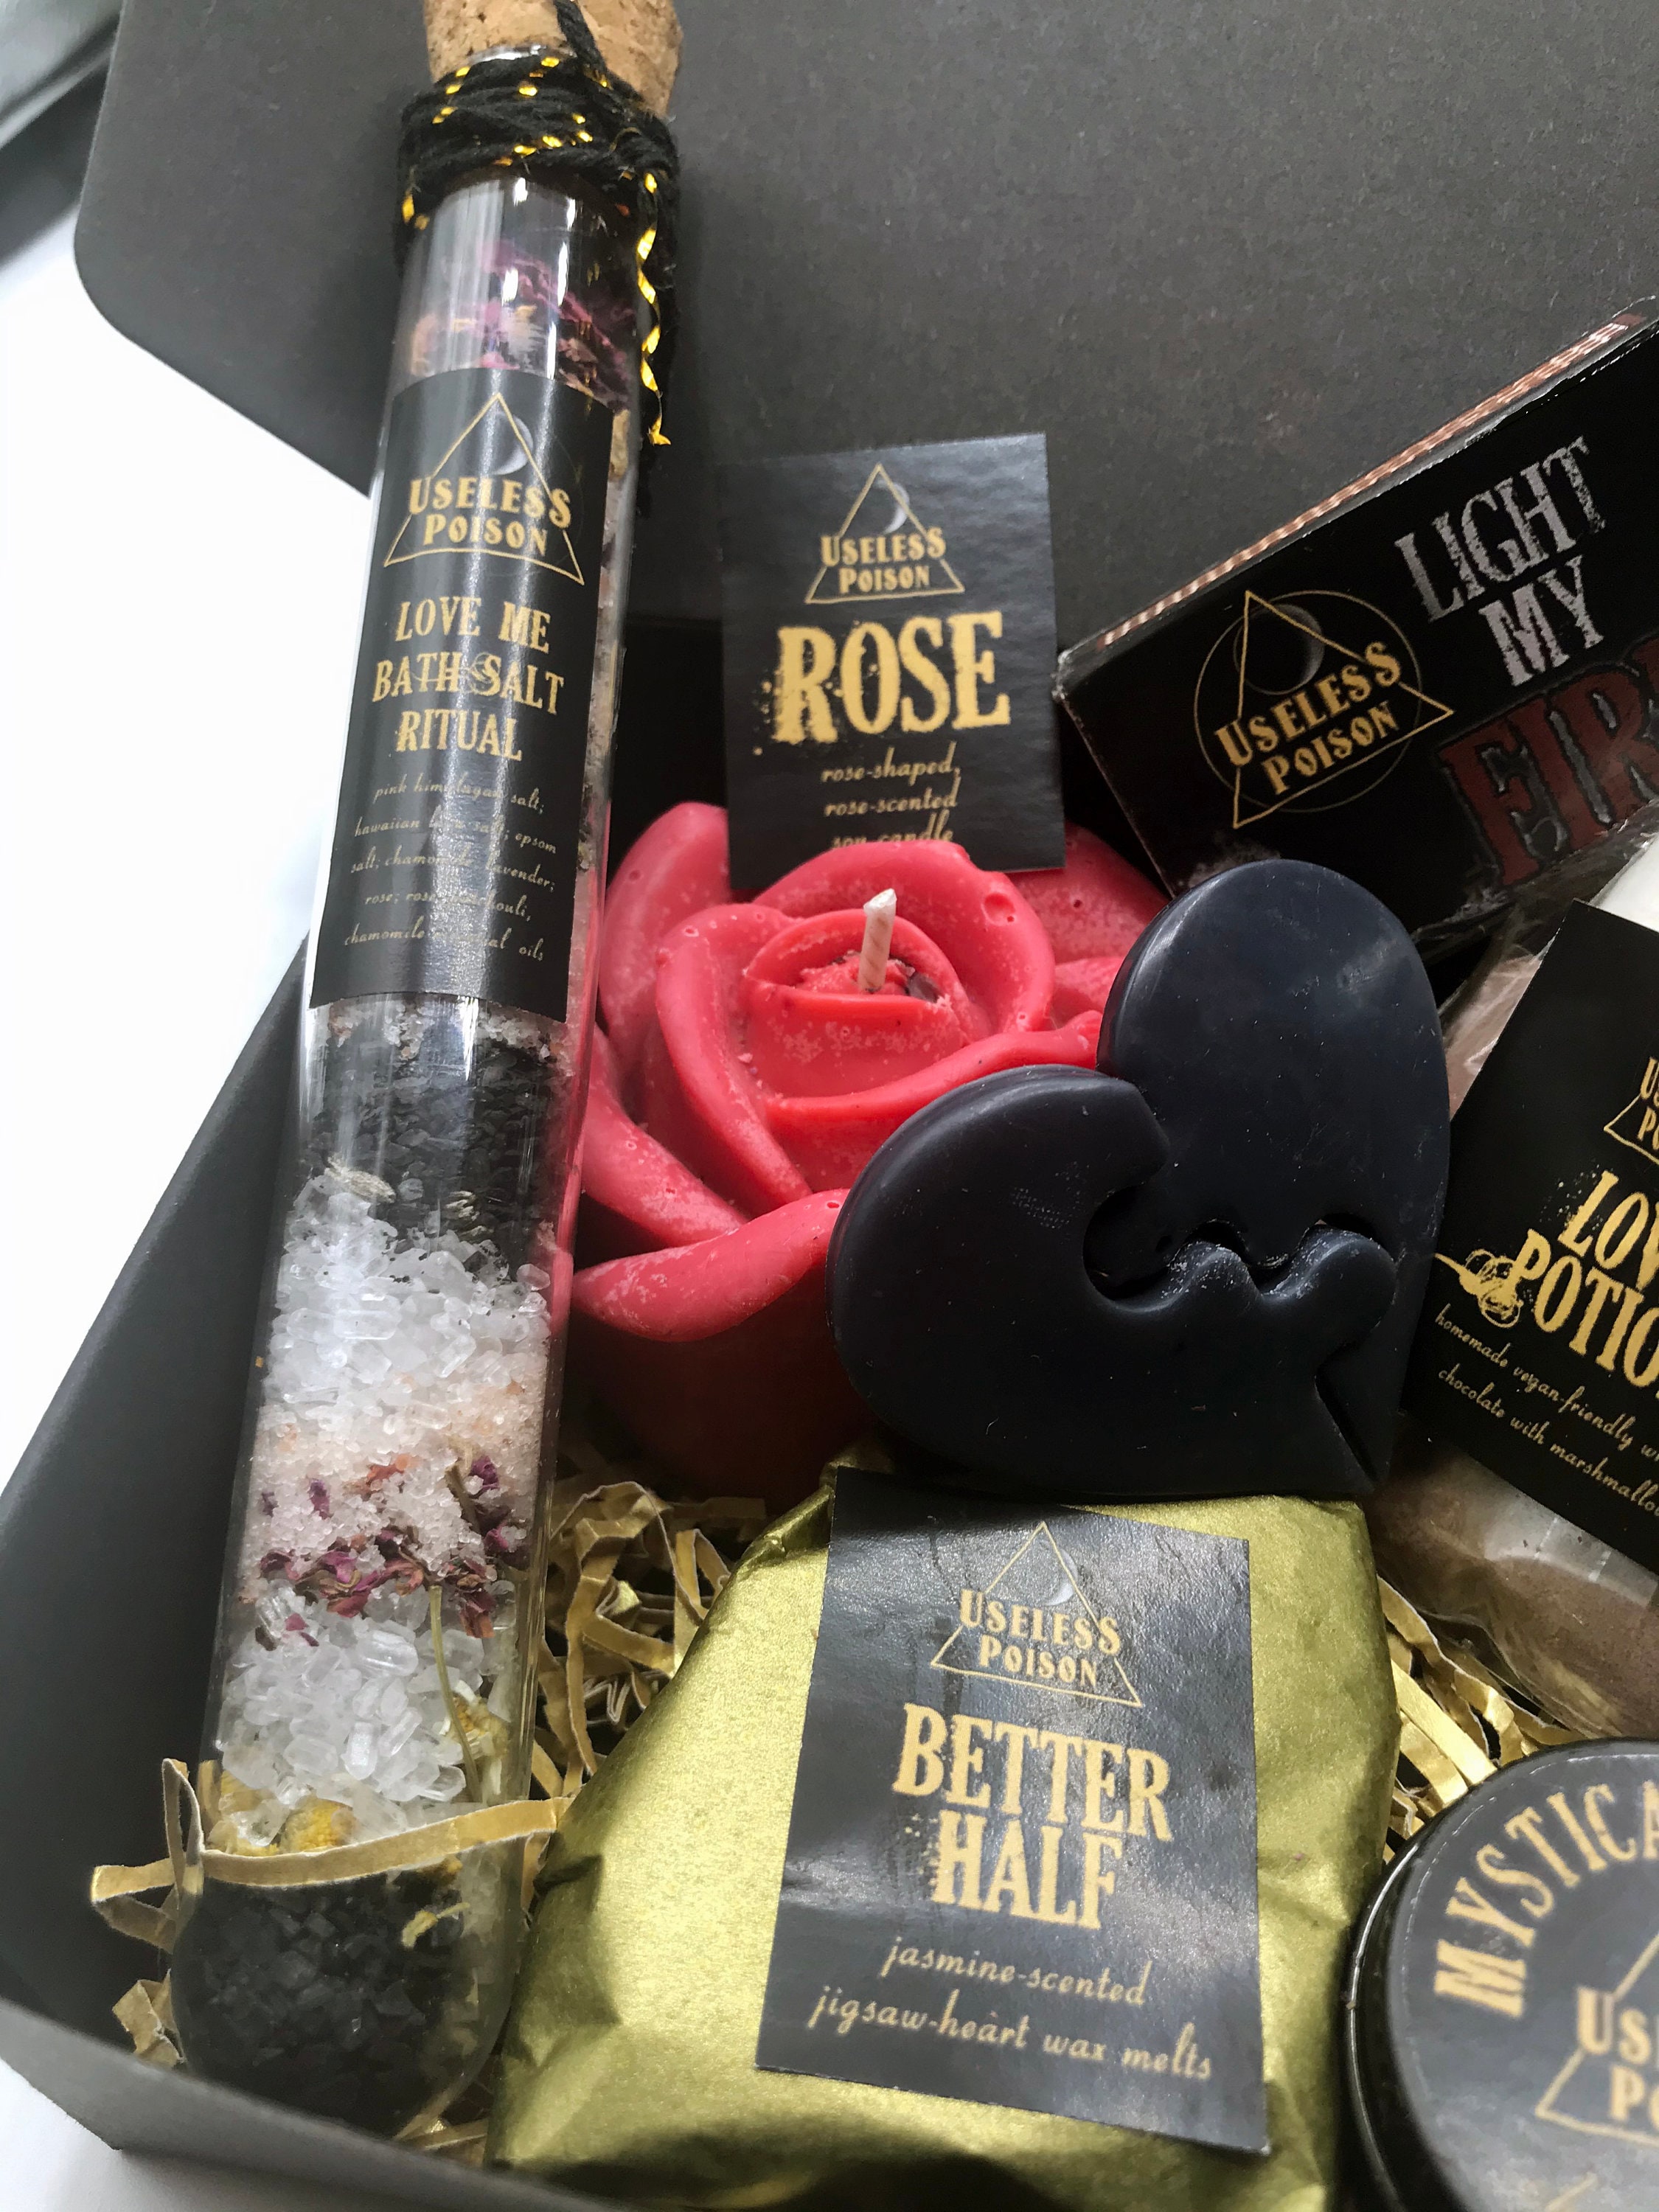 The Lovers Gothic Valentine's Hamper Kit Valentine's Day Gift Goth Gothic  Pamper Package 